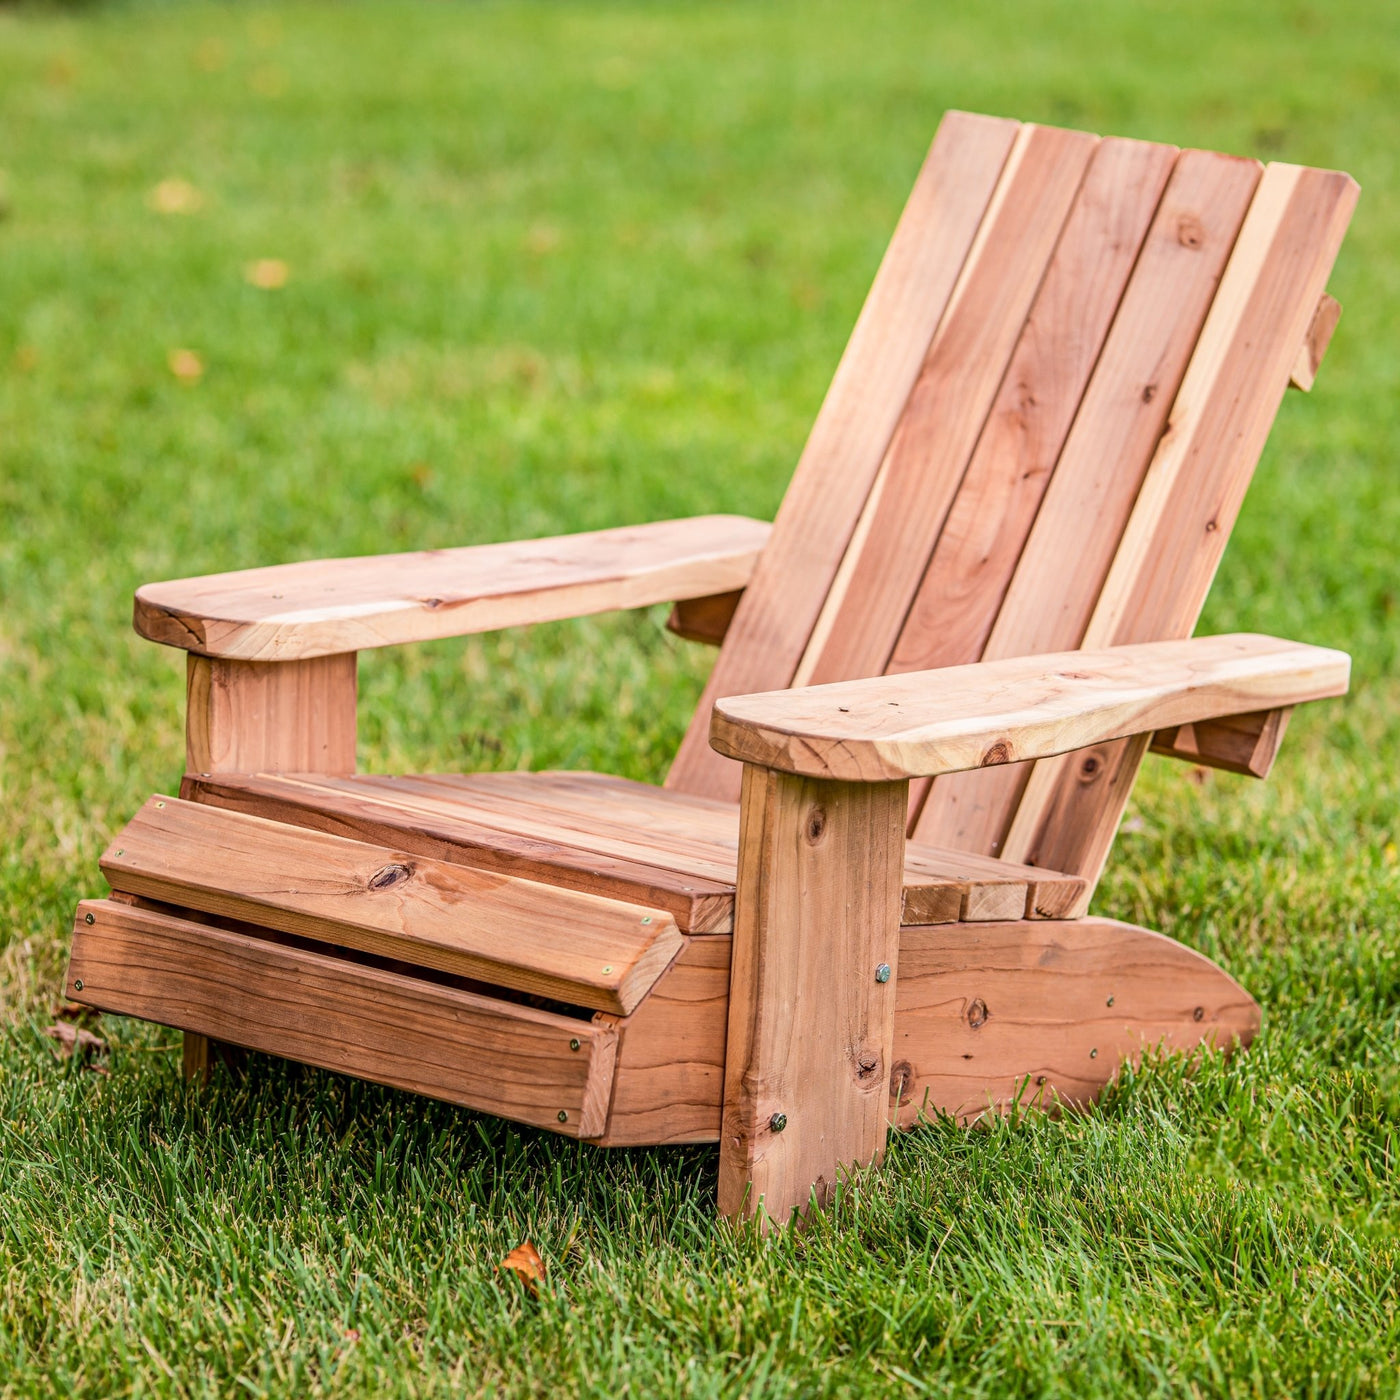 Adult Adirondack Chair